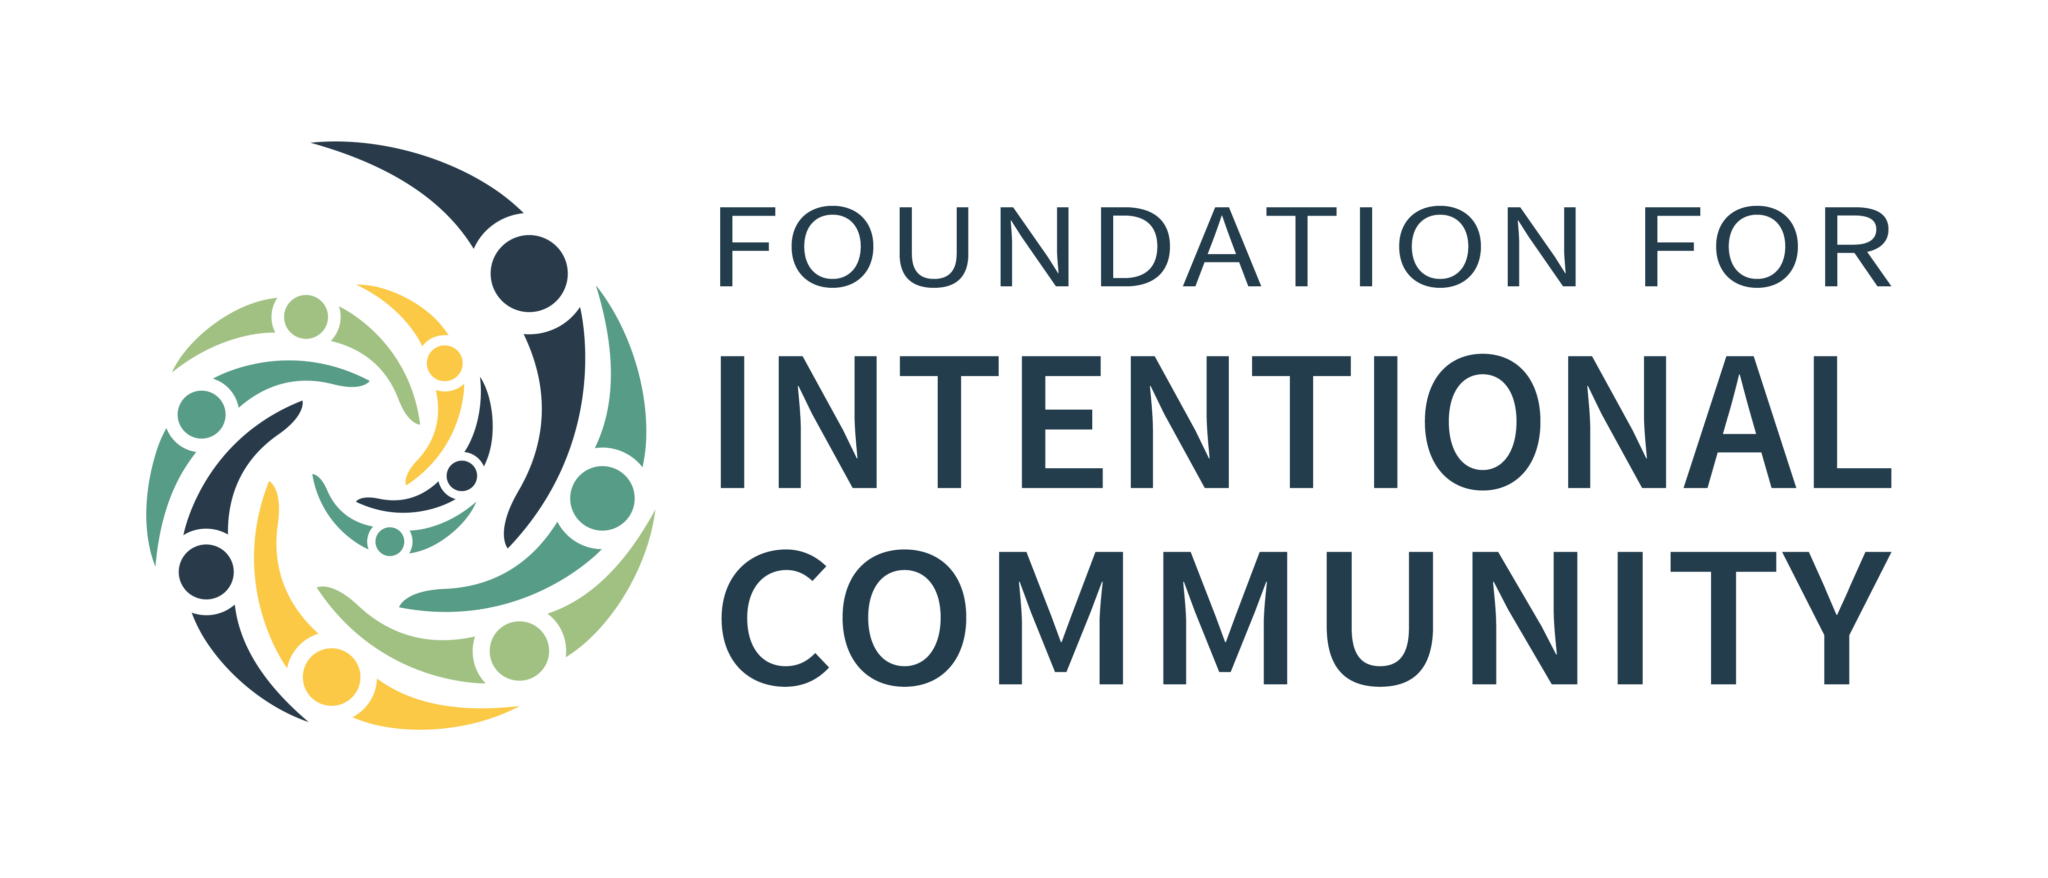 Foundation for Intentional Community - Partenaire de Sociocracy For All